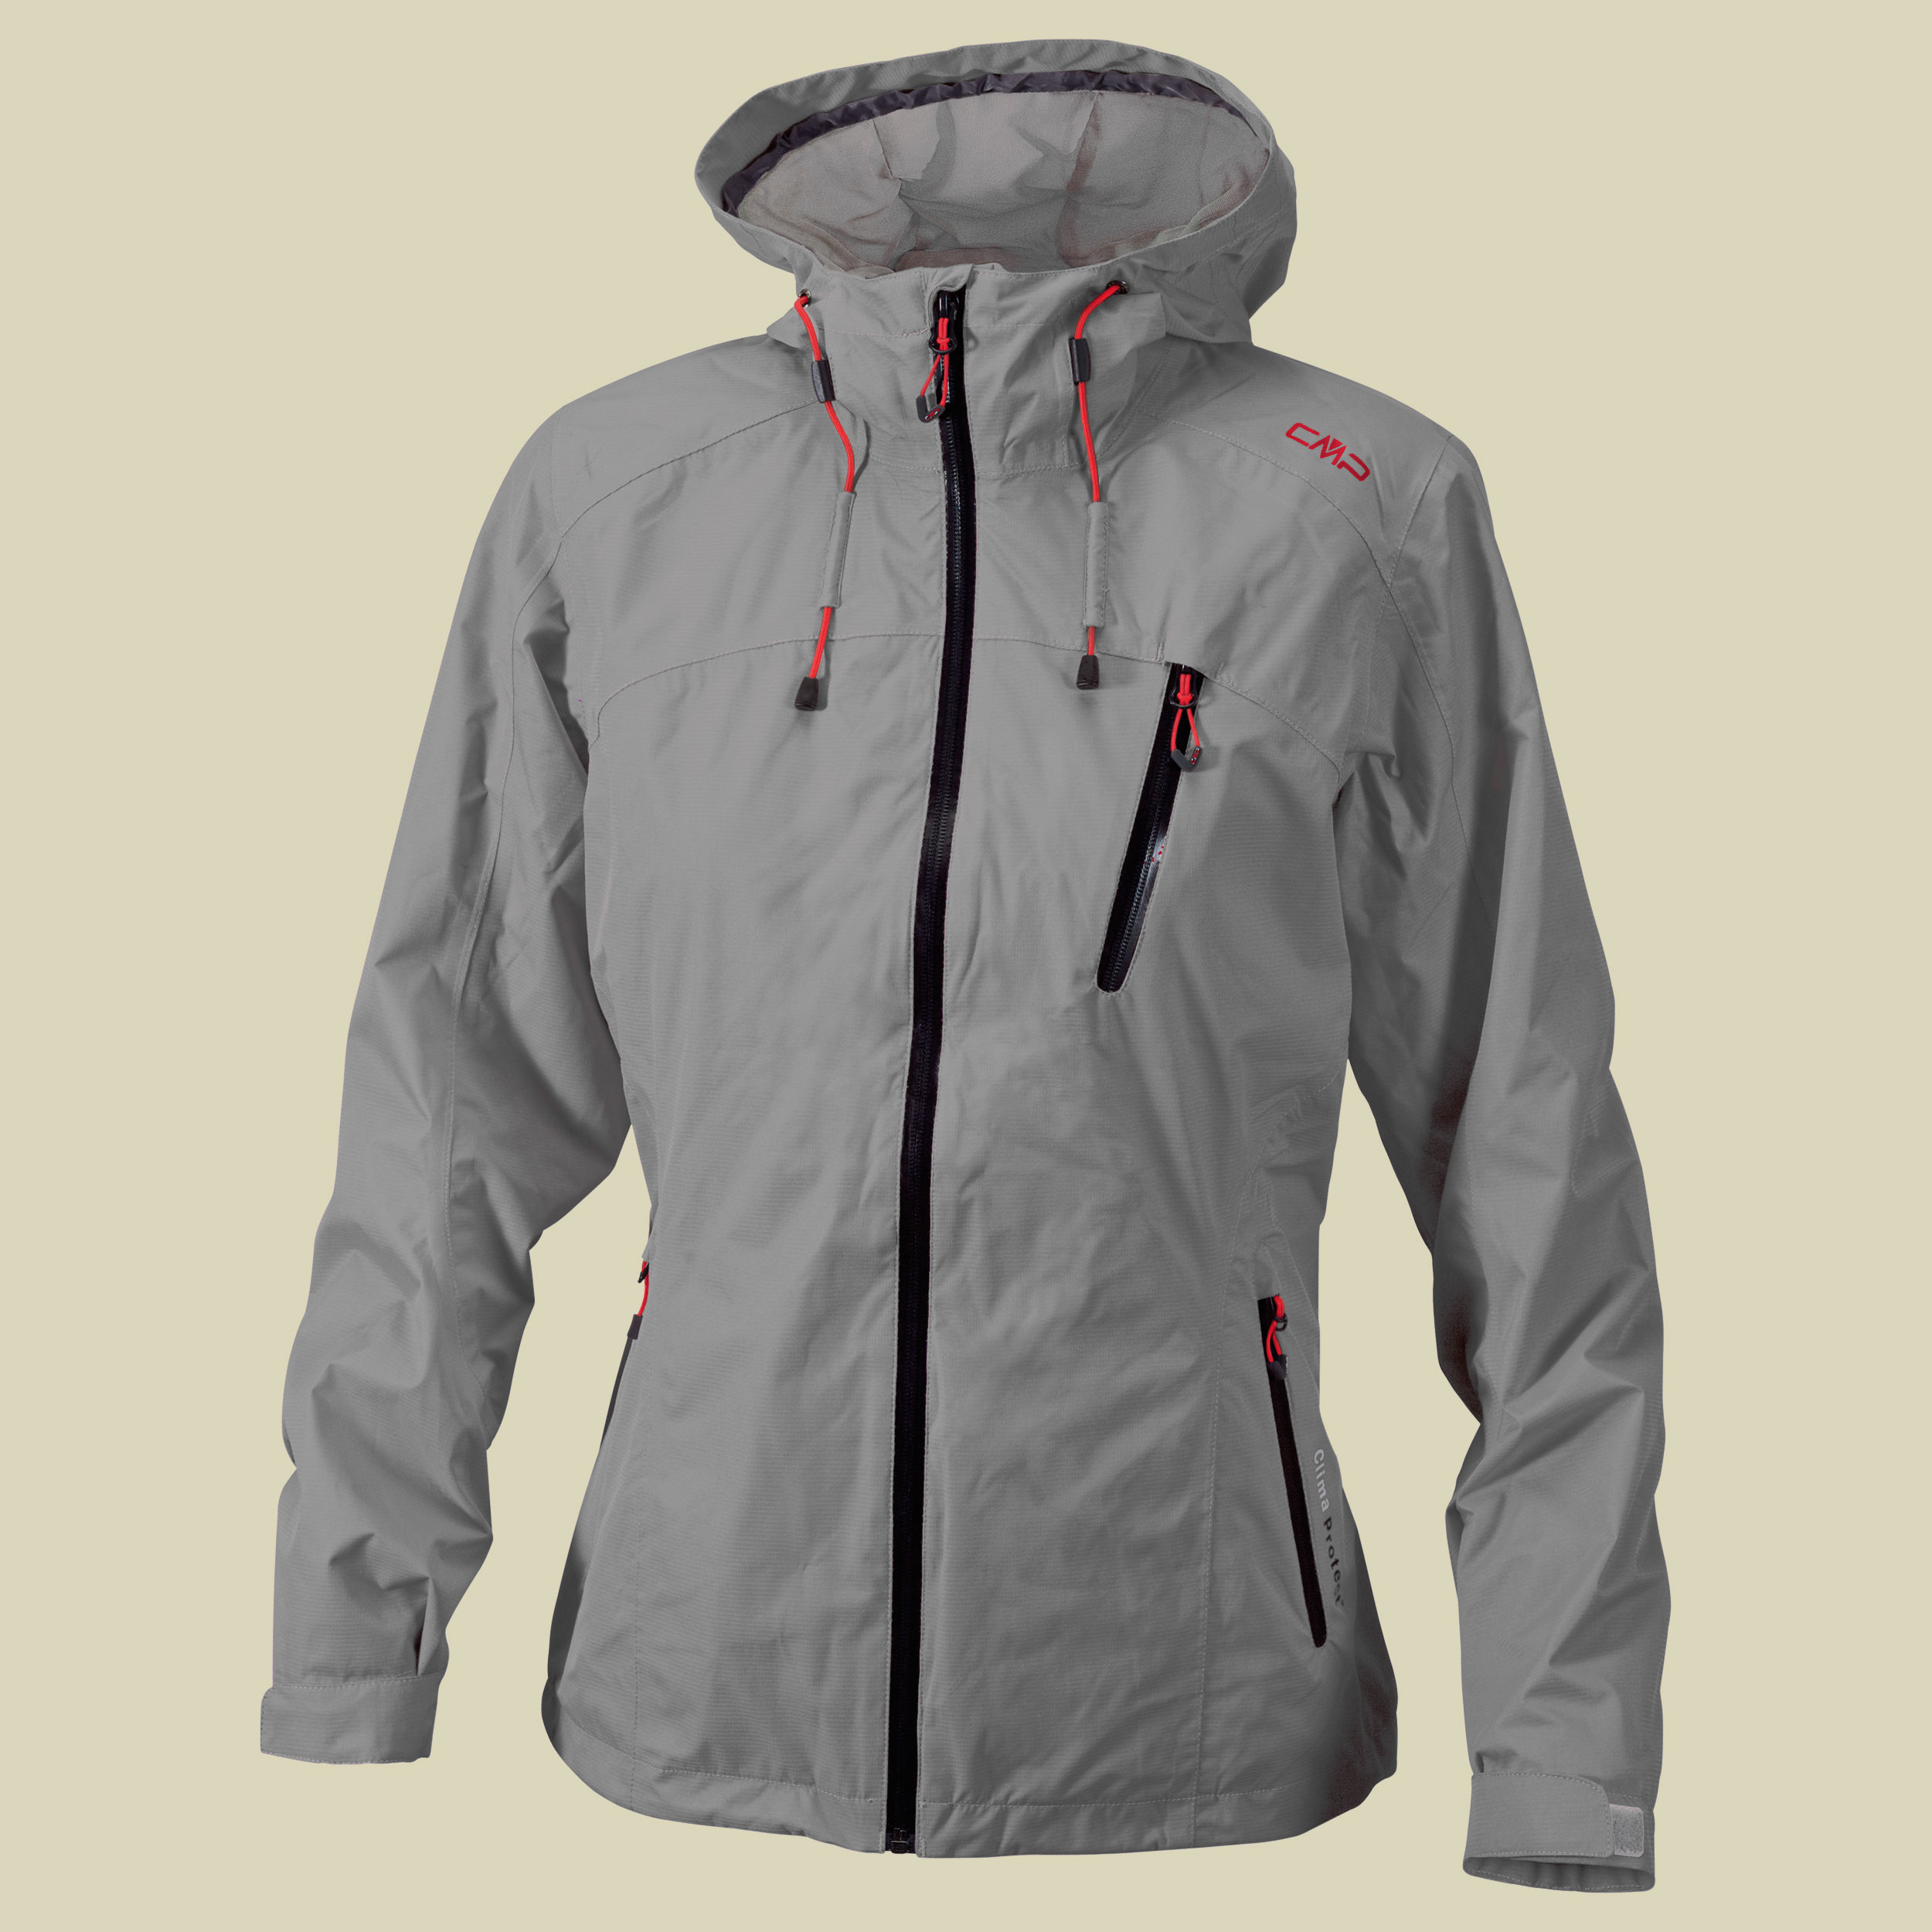 Woman Jacket Fix Hood 3Z63246 Größe 34 Farbe U418 metal/antracite-campari